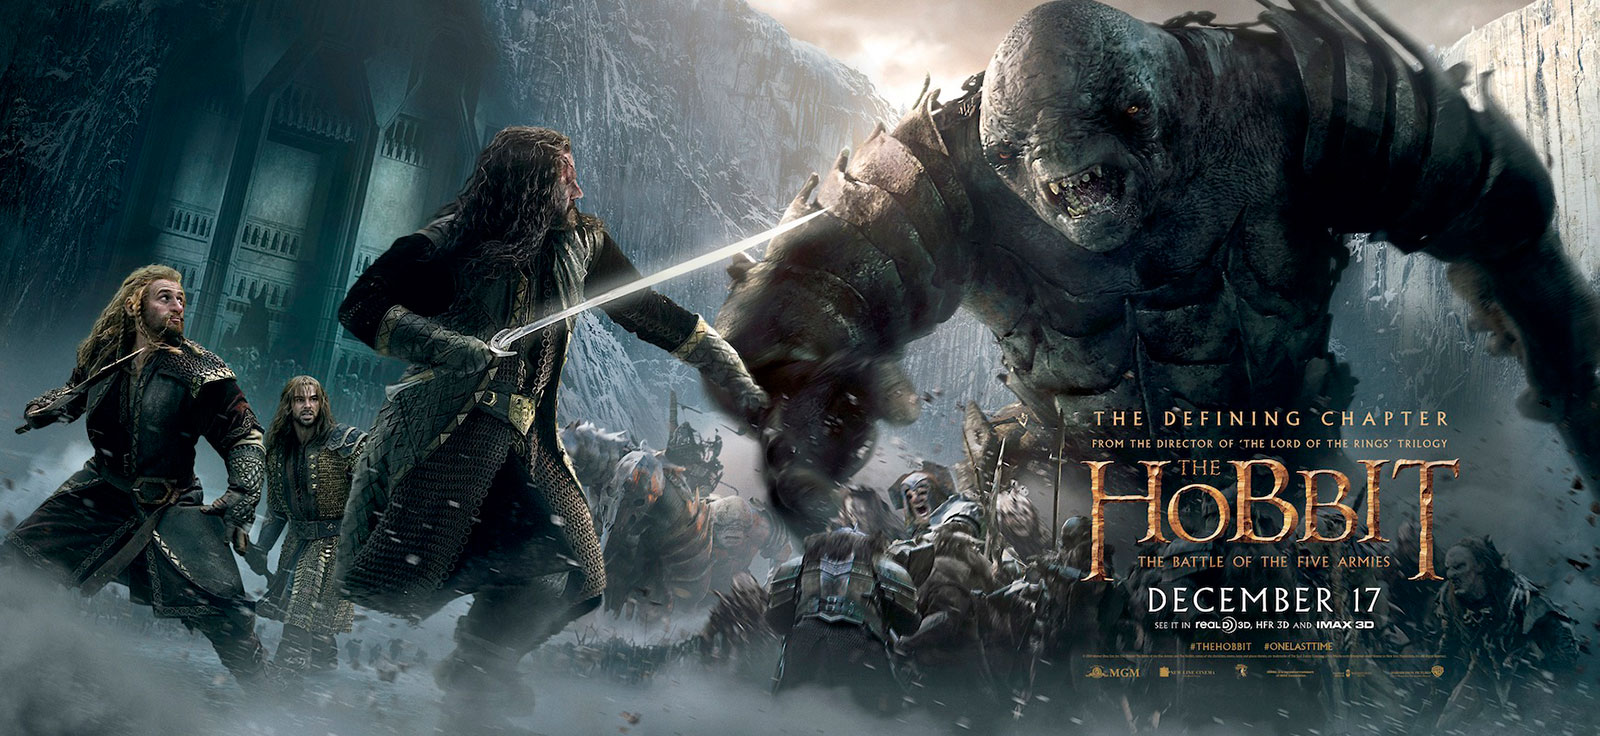 Hobbit 3 The Battle of the Five Armies 2014 Desktop Wallpaper HD 1600x736